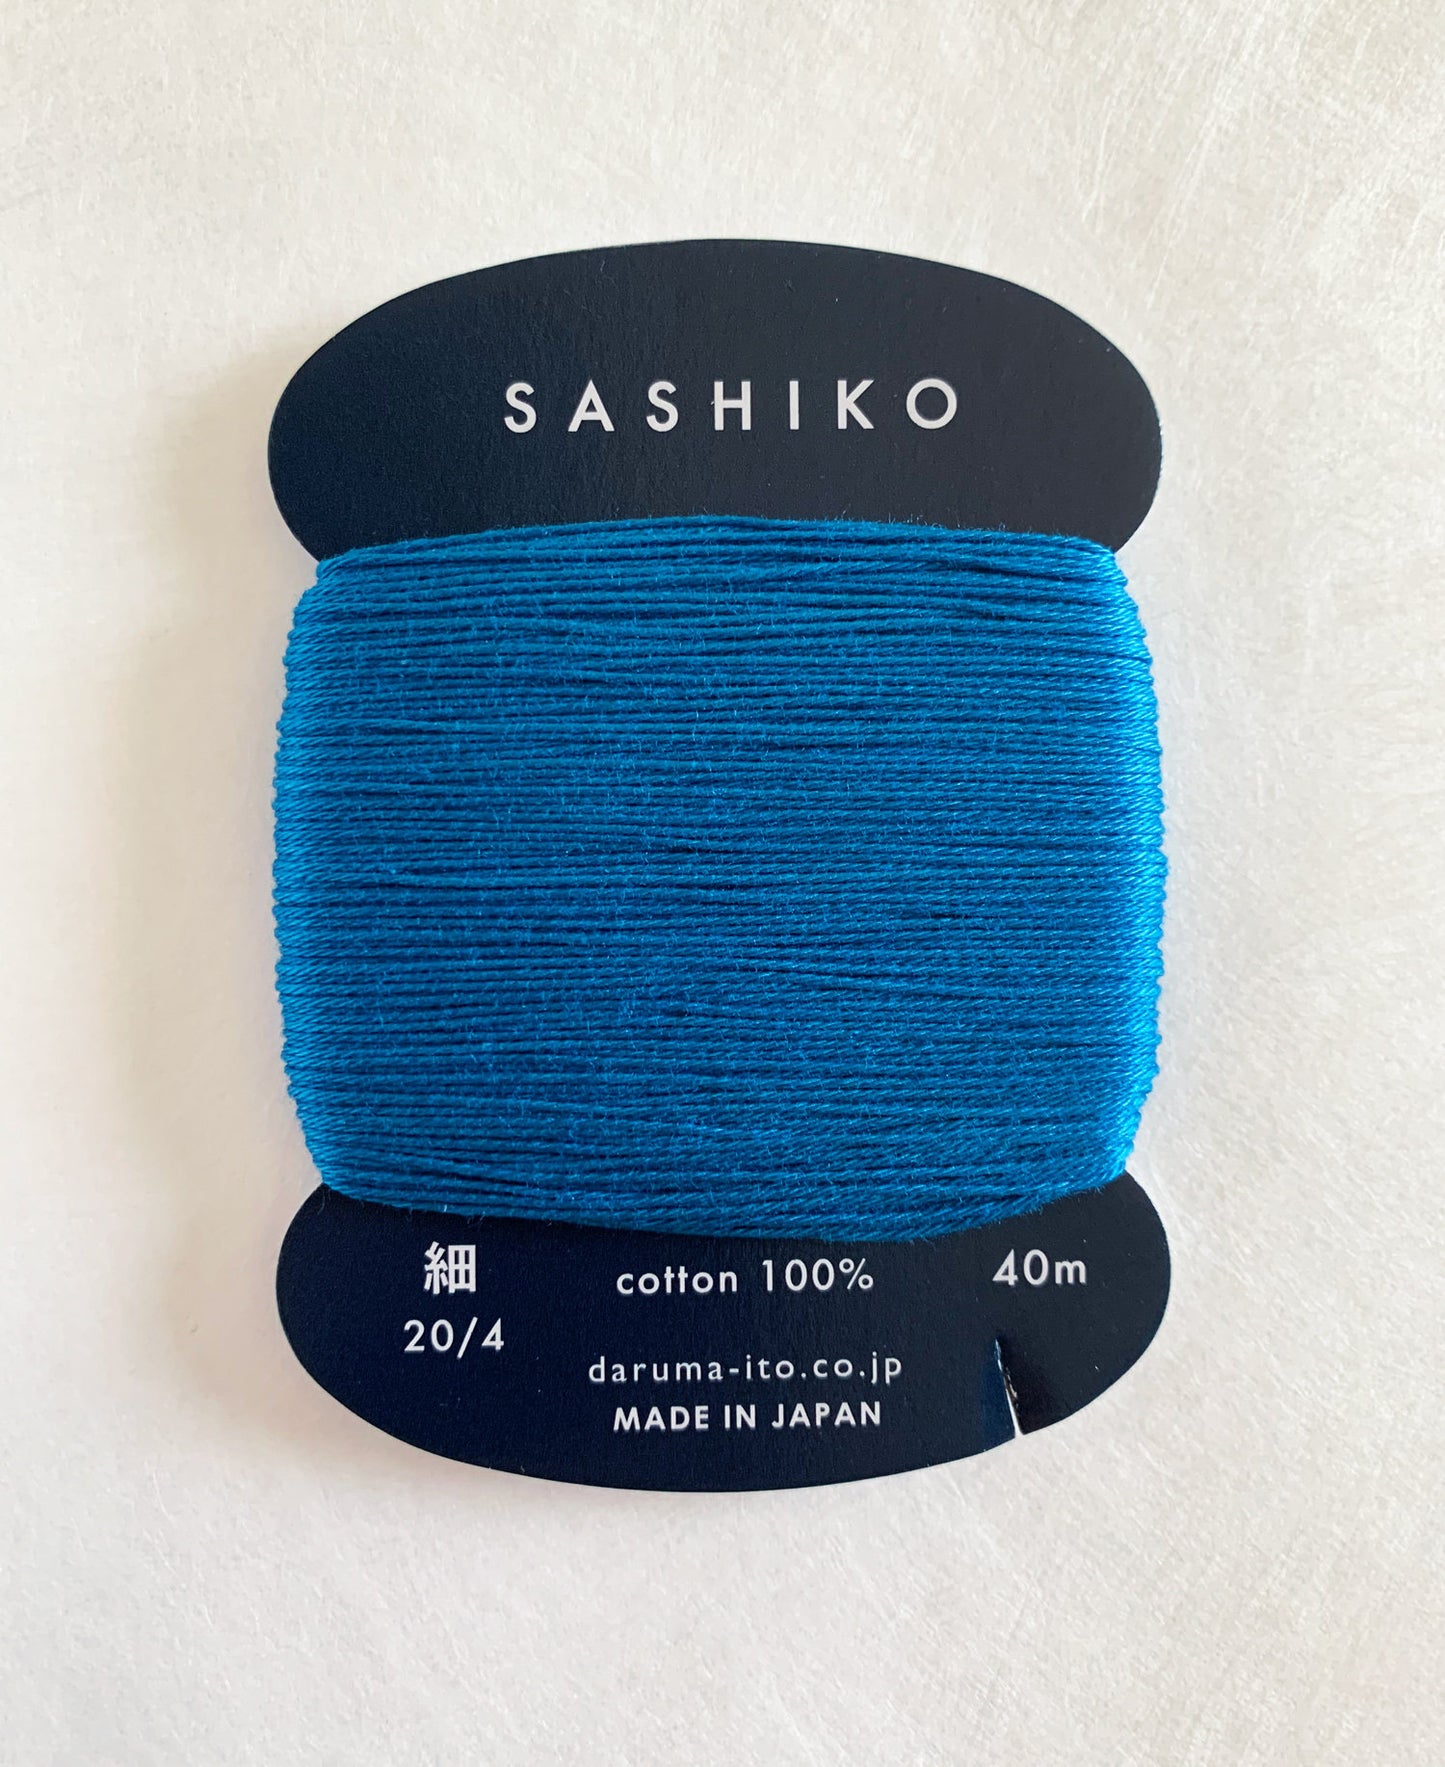 Daruma #224 BLUE Japanese Cotton SASHIKO thread 40 meter skein 20/4 青